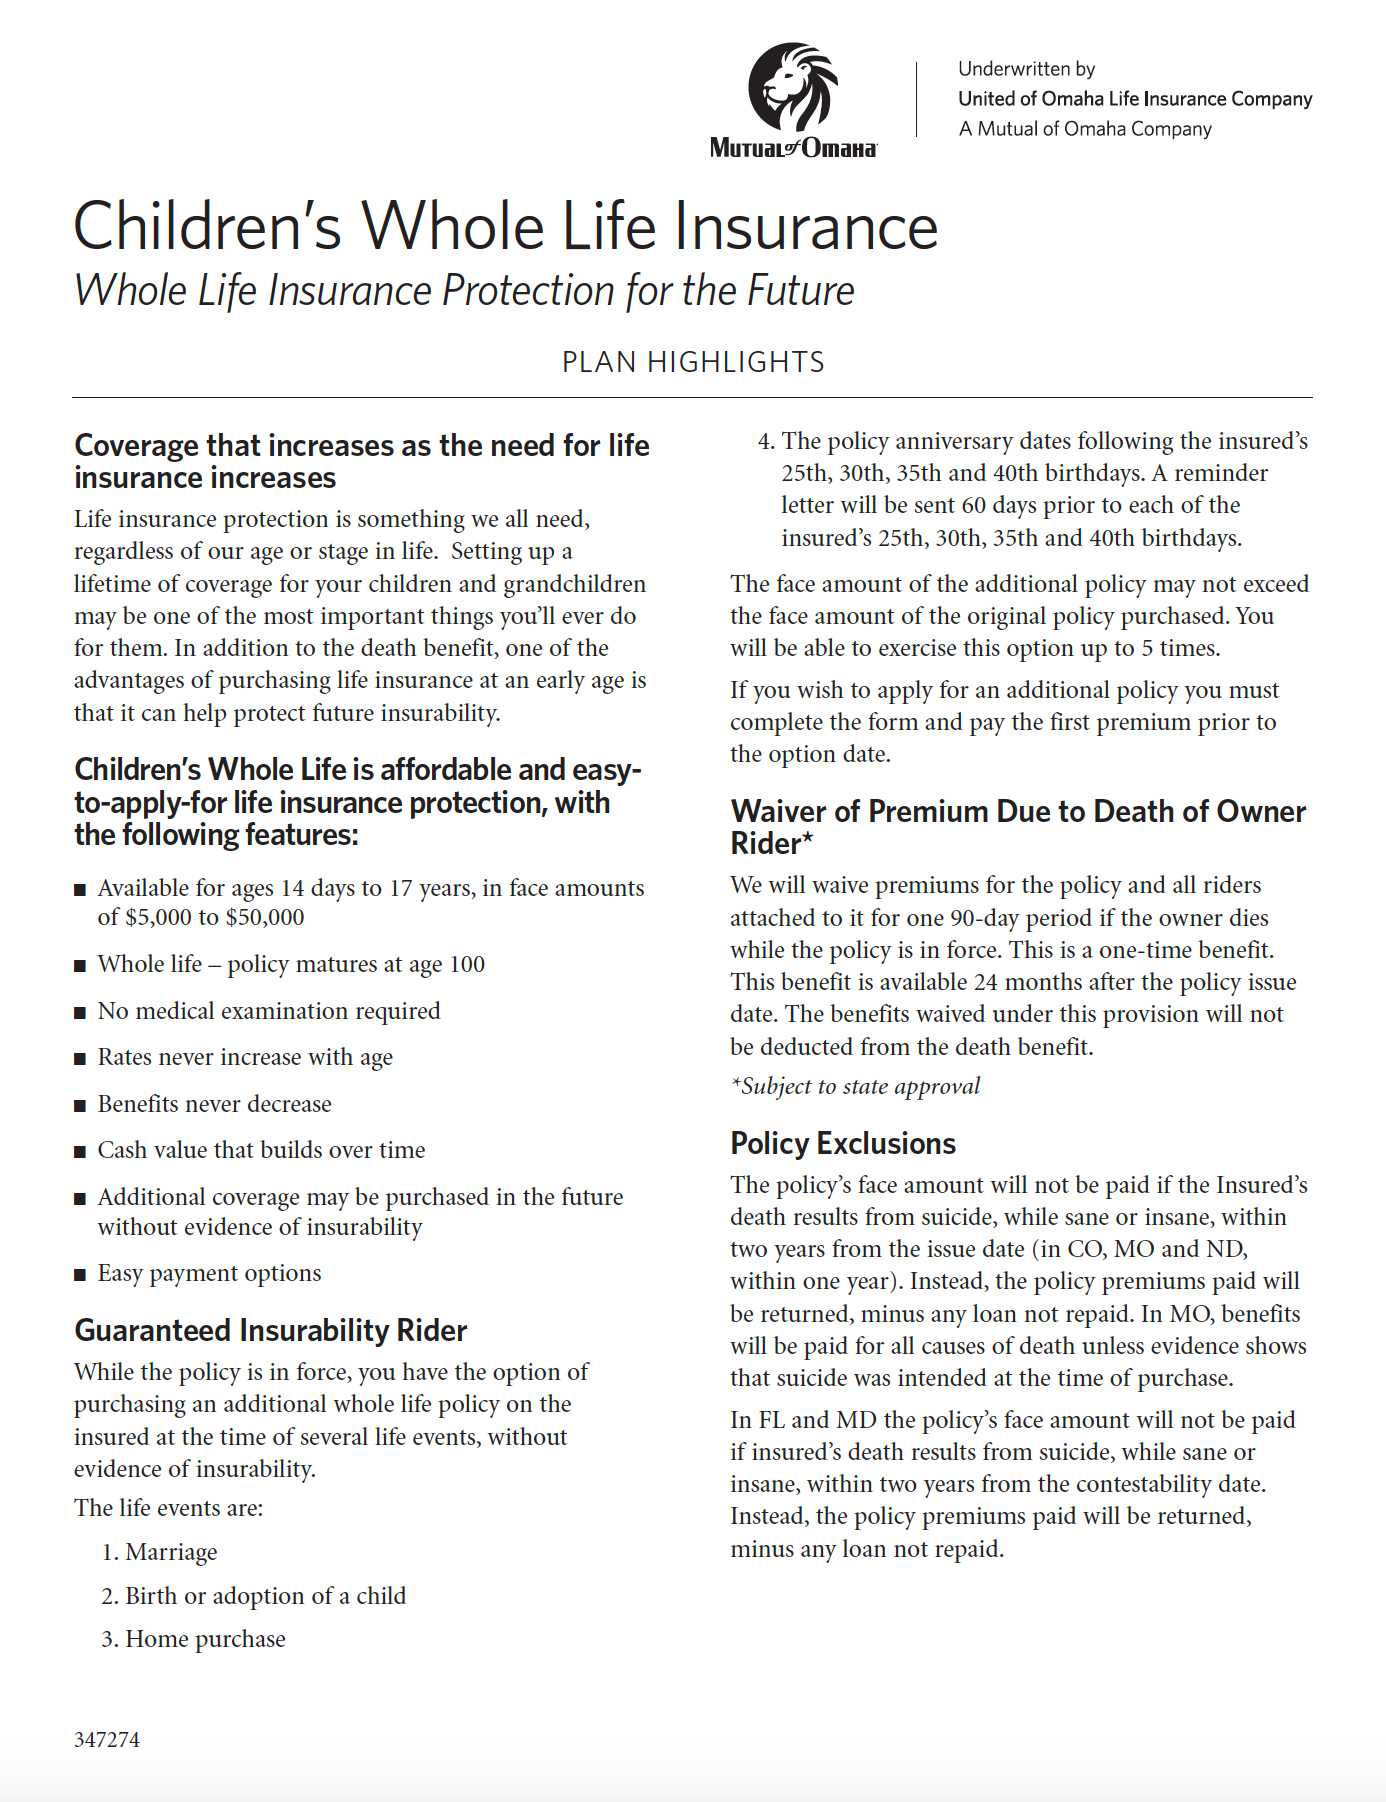 Children’s Whole Life Client Highlight Sheet